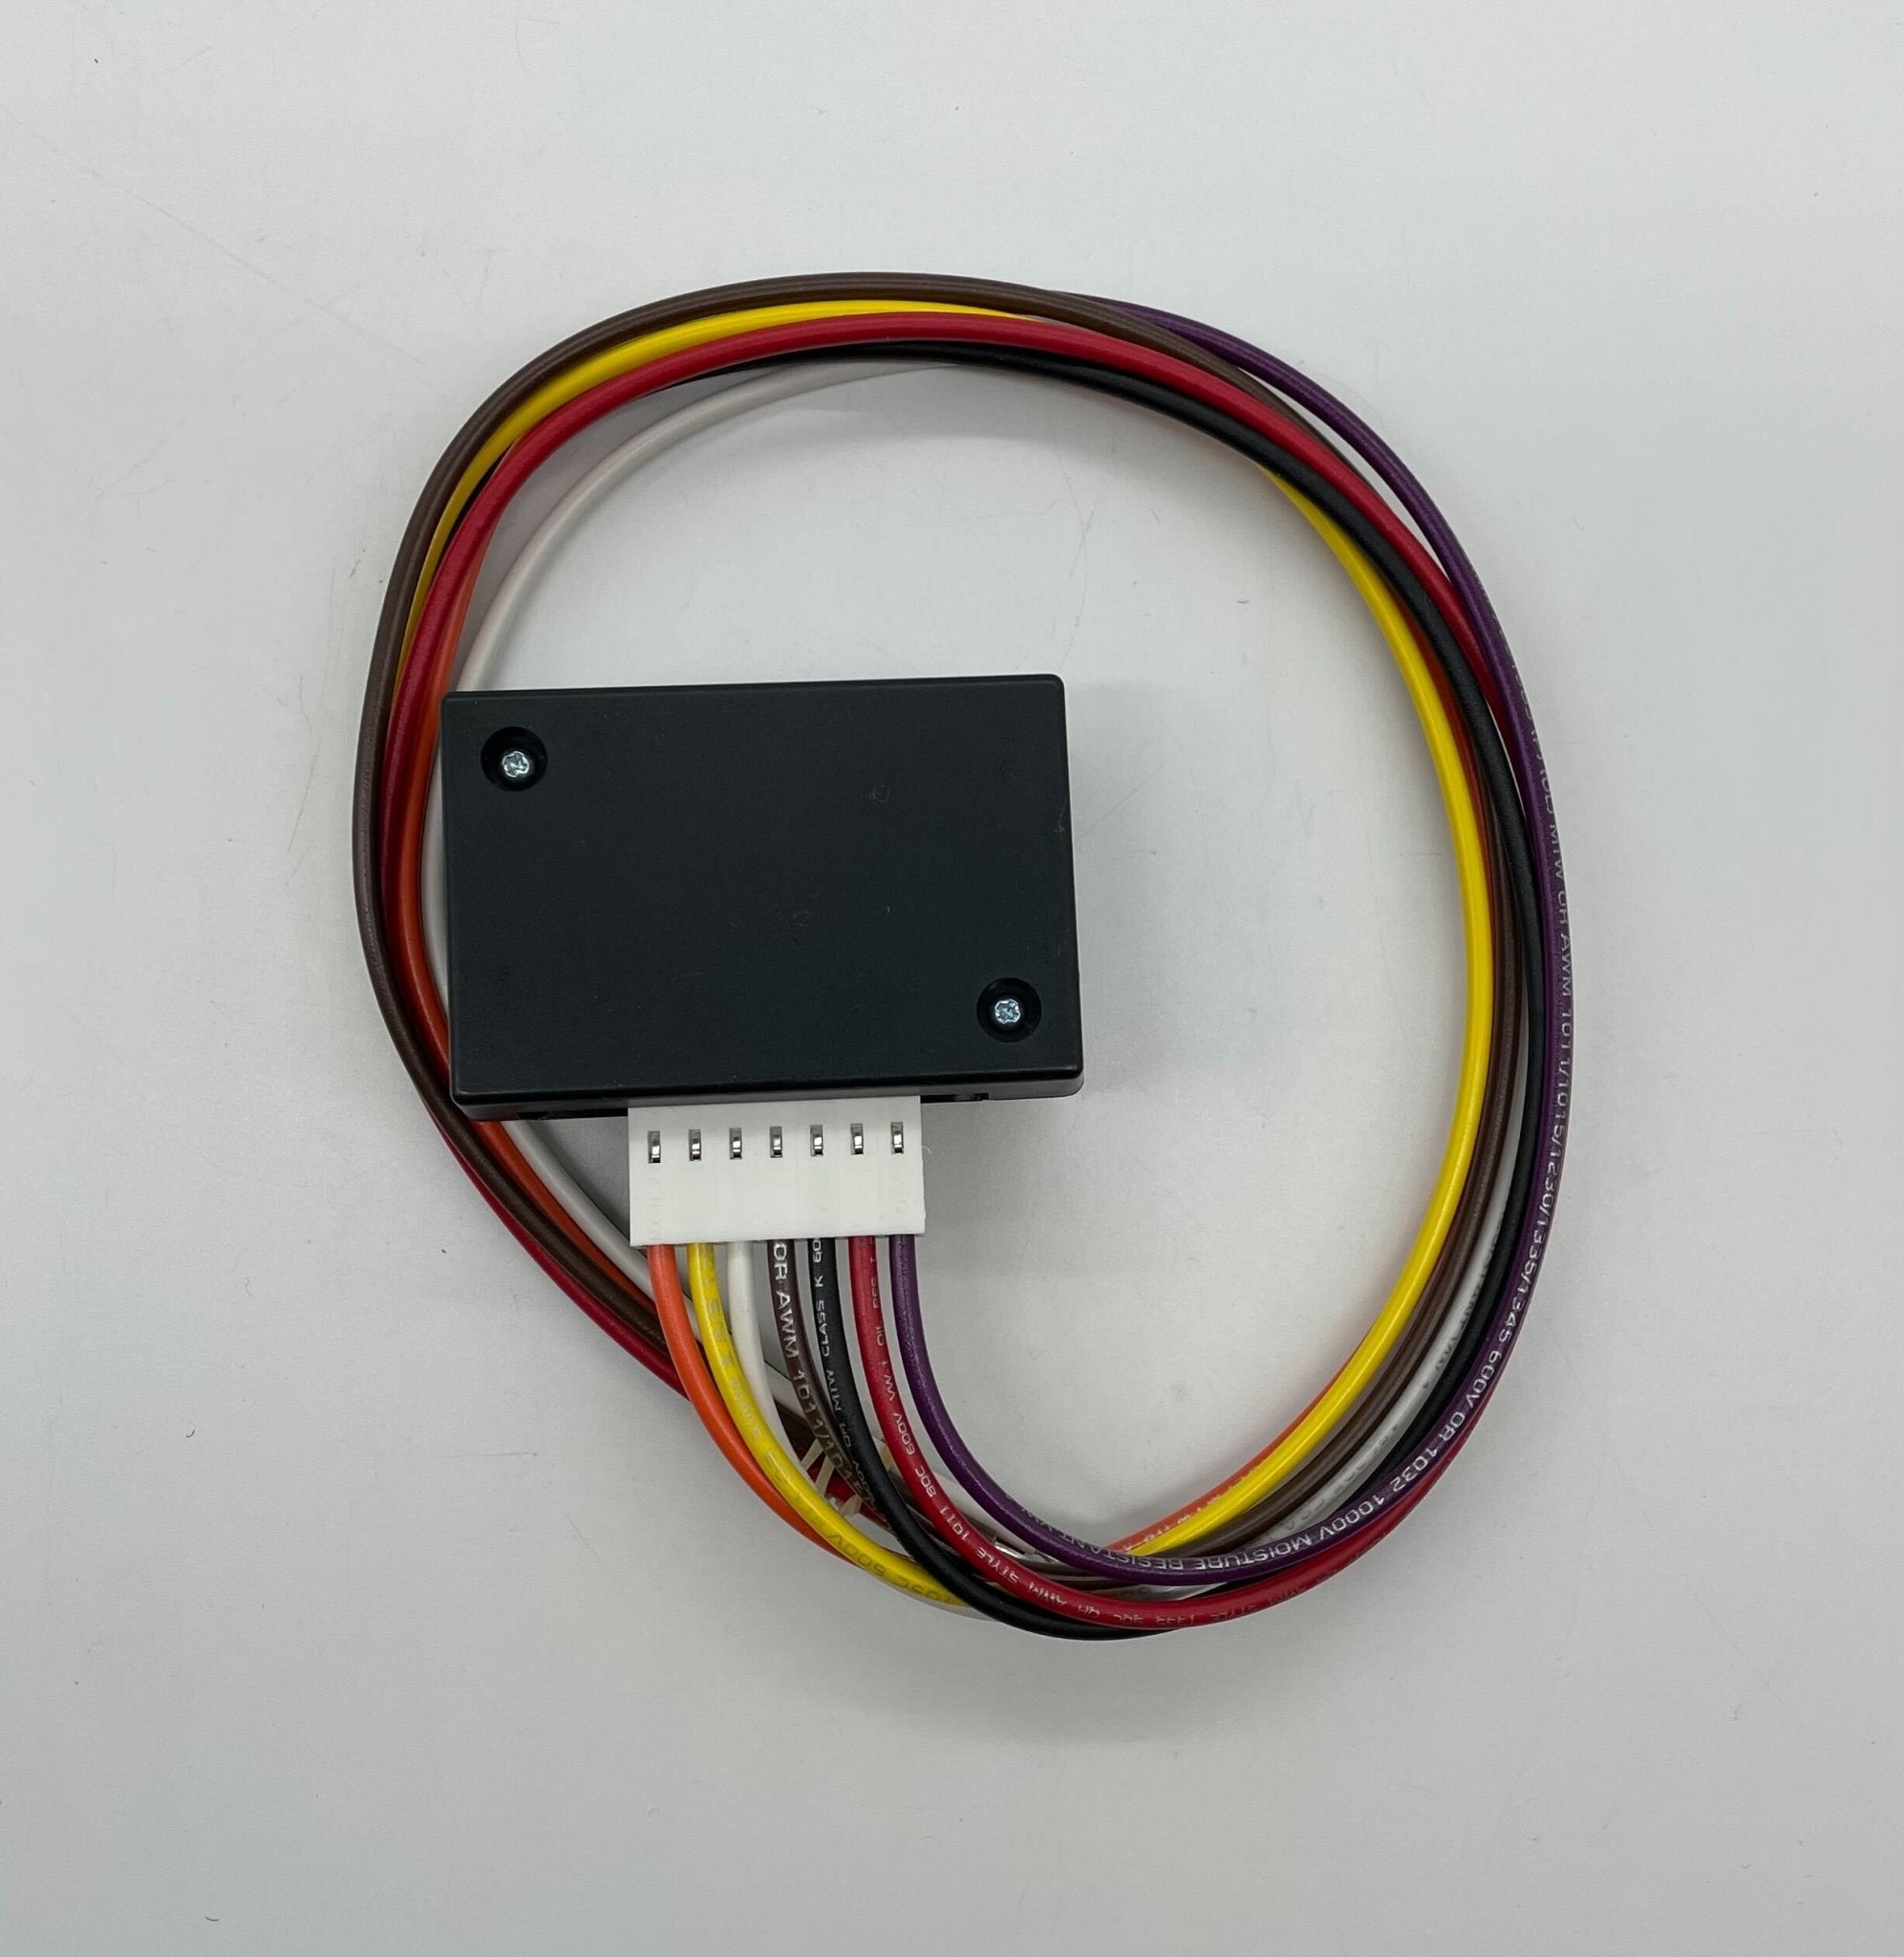 System Sensor RRS-MOD - The Fire Alarm Supplier